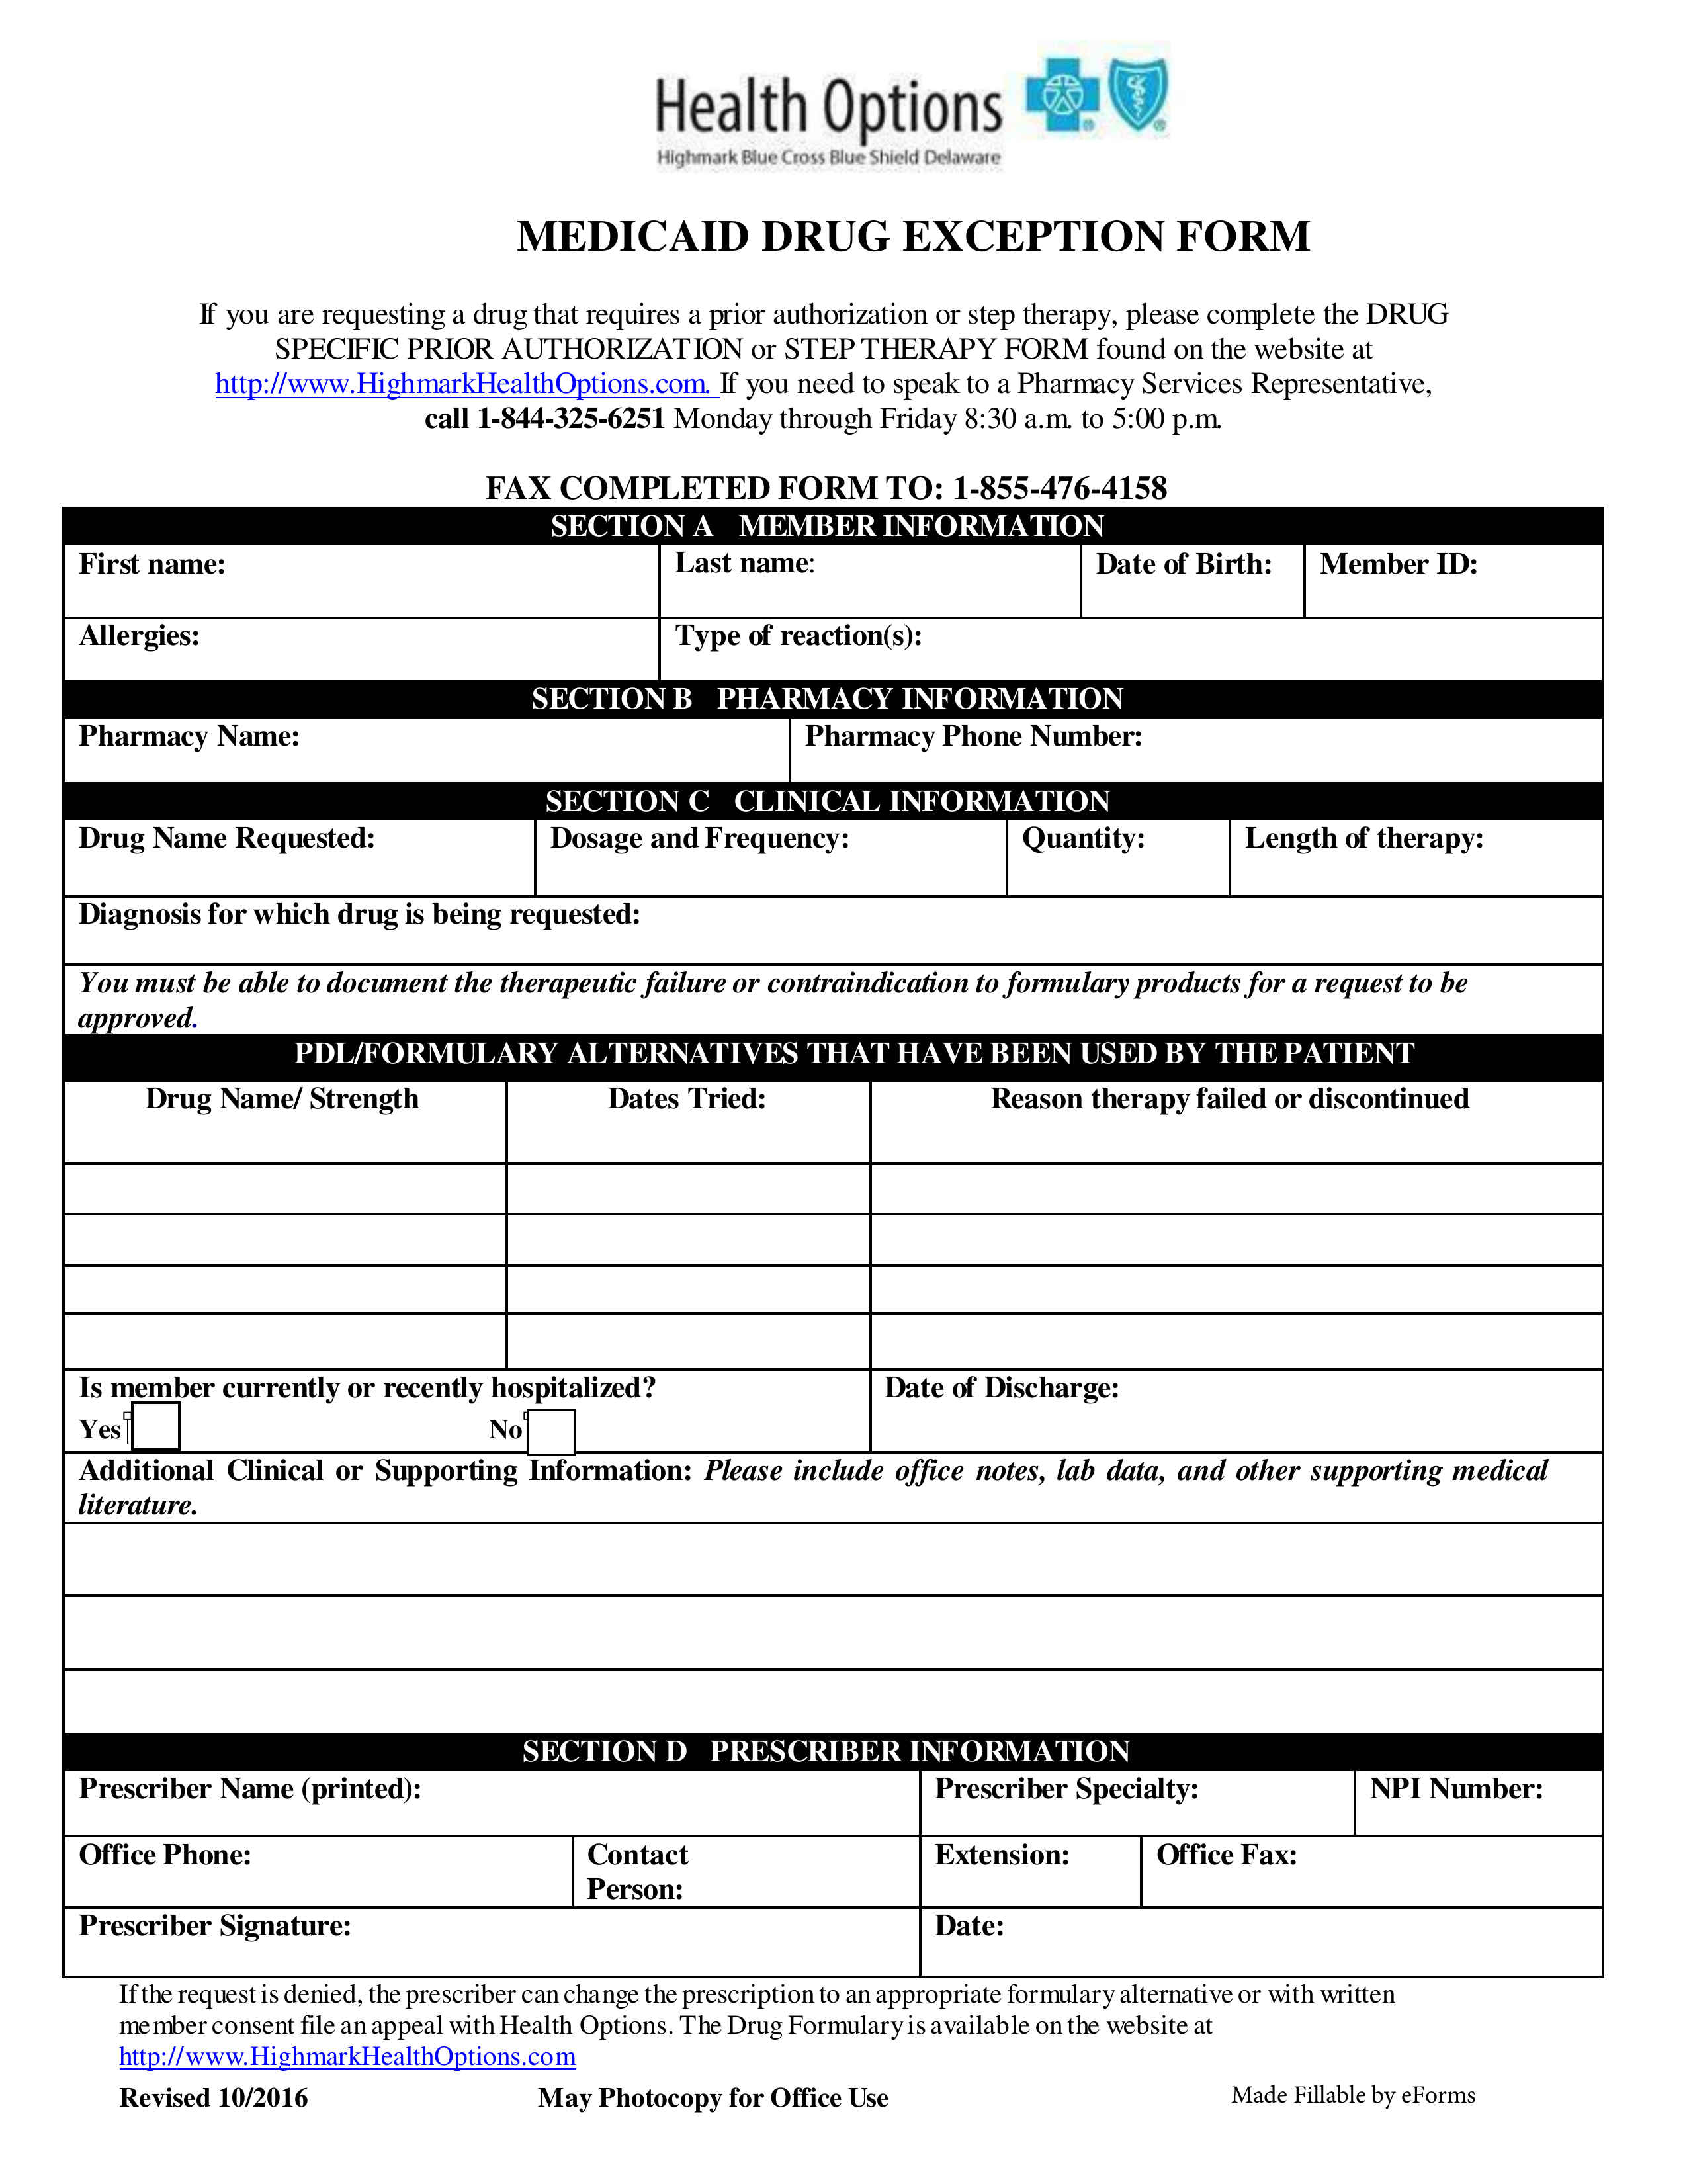 Delaware Medicaid Prior (Rx) Authorization Form